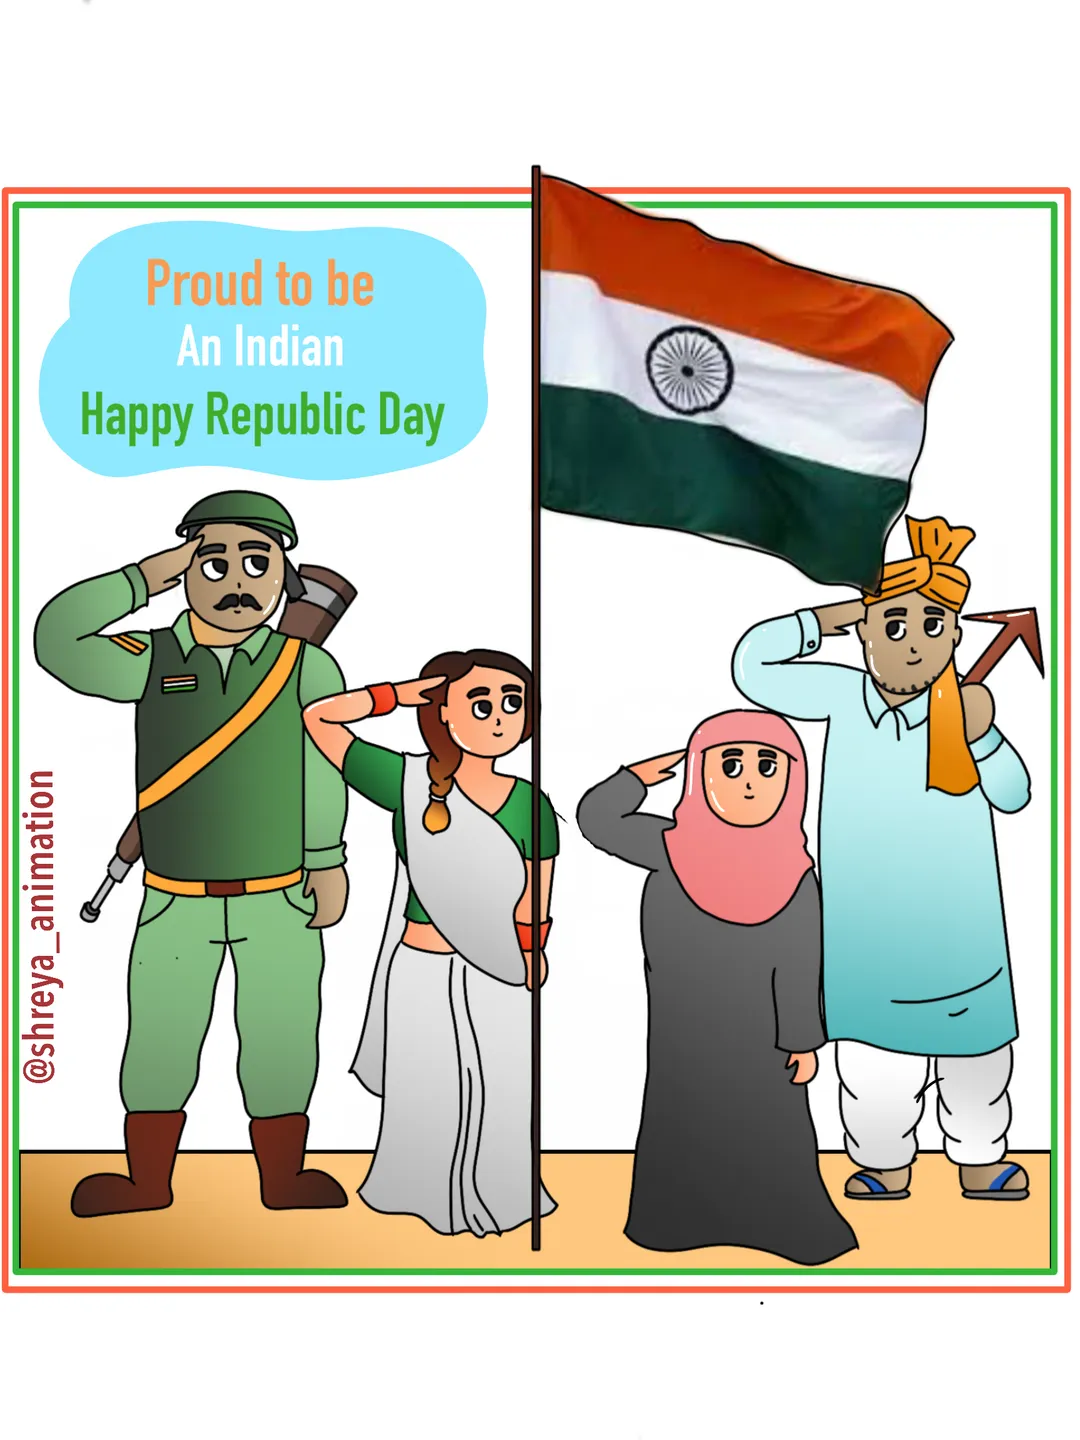 Happy Republic Day!!